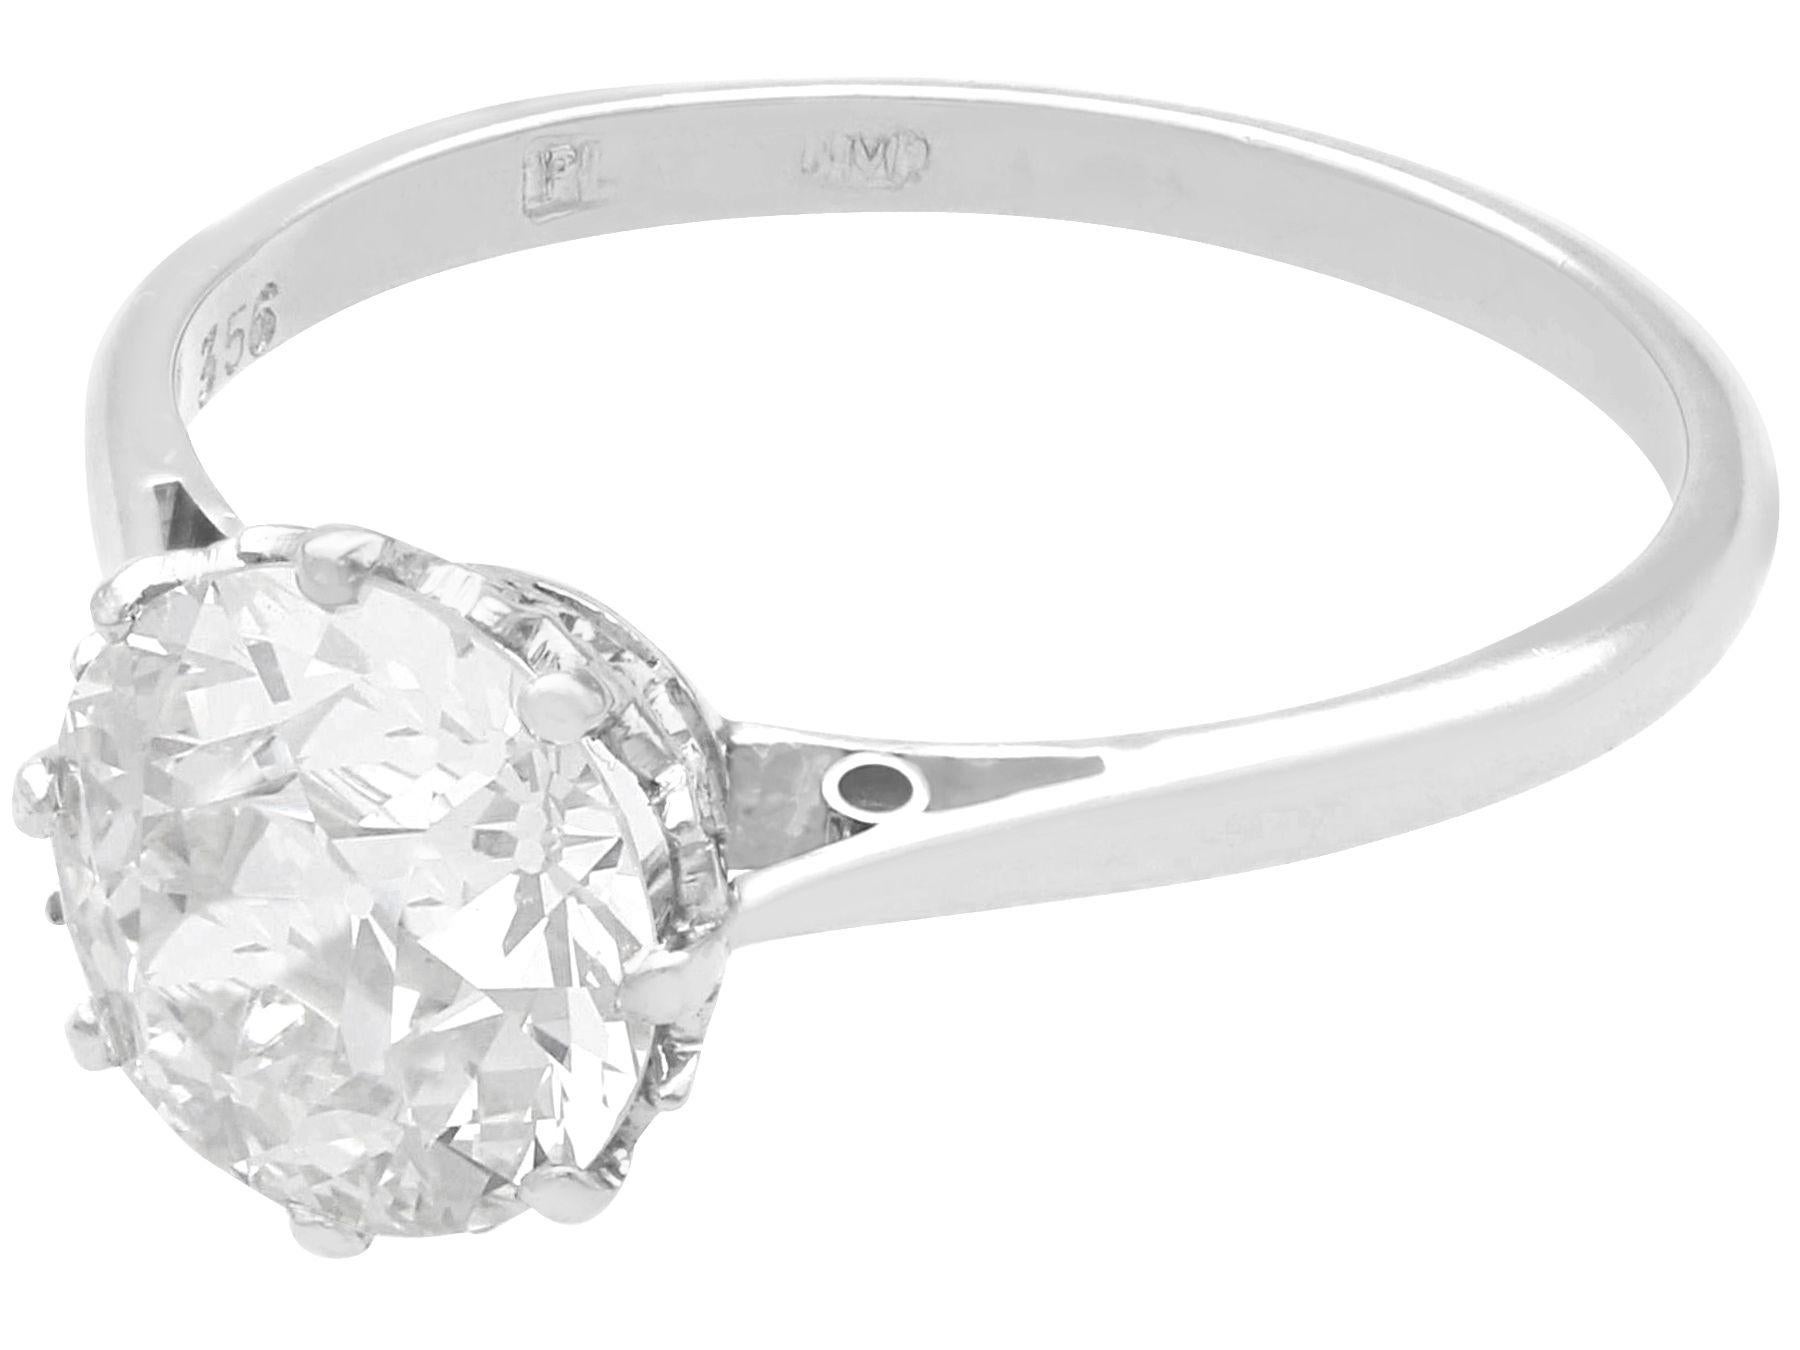 186 carat diamond